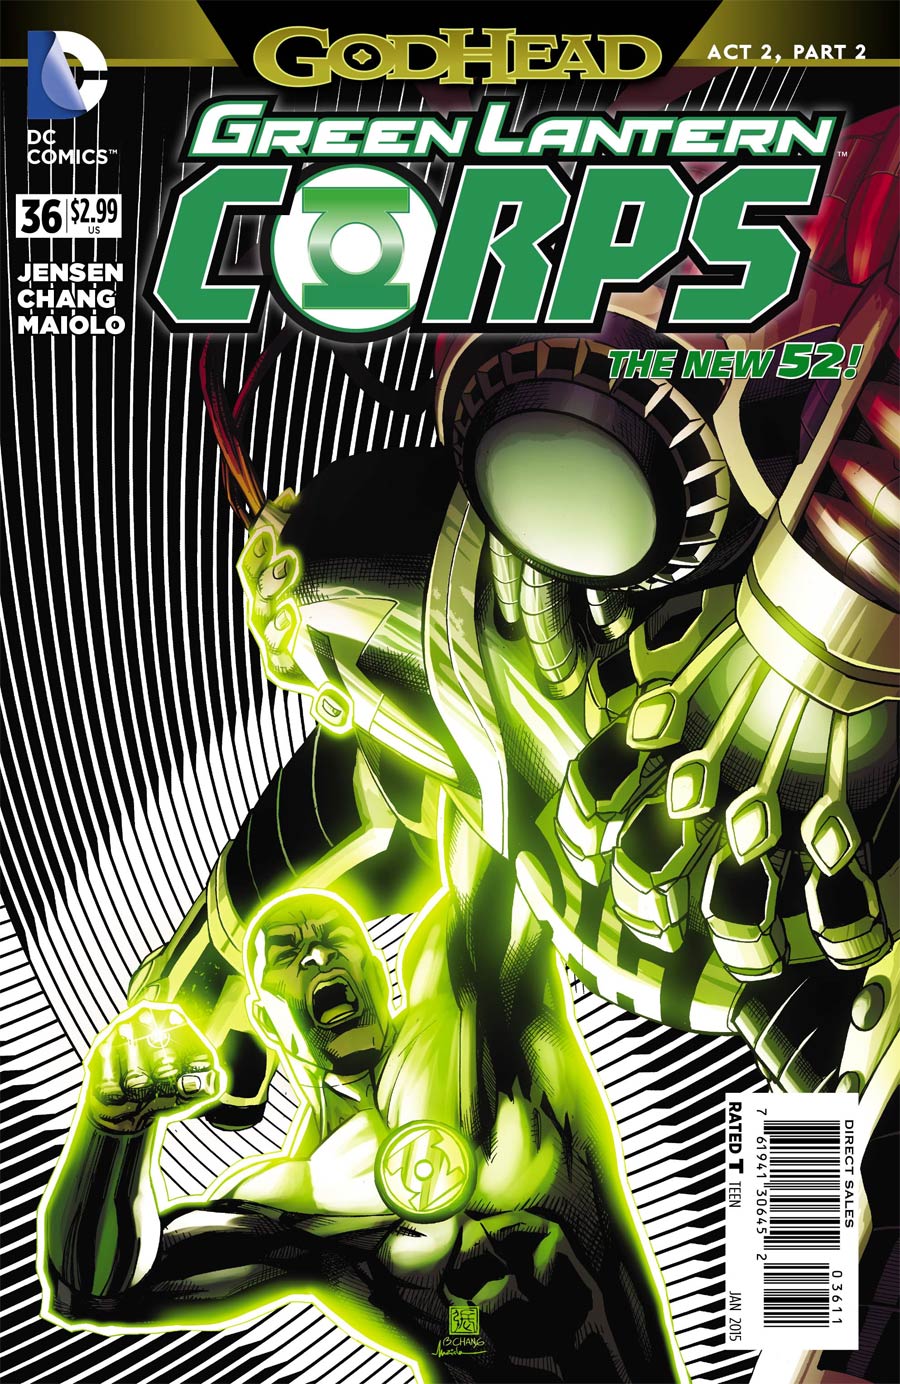 Green Lantern Corps Vol 3 #36 Cover A Regular Bernard Chang Cover (Godhead Act 2 Part 2)